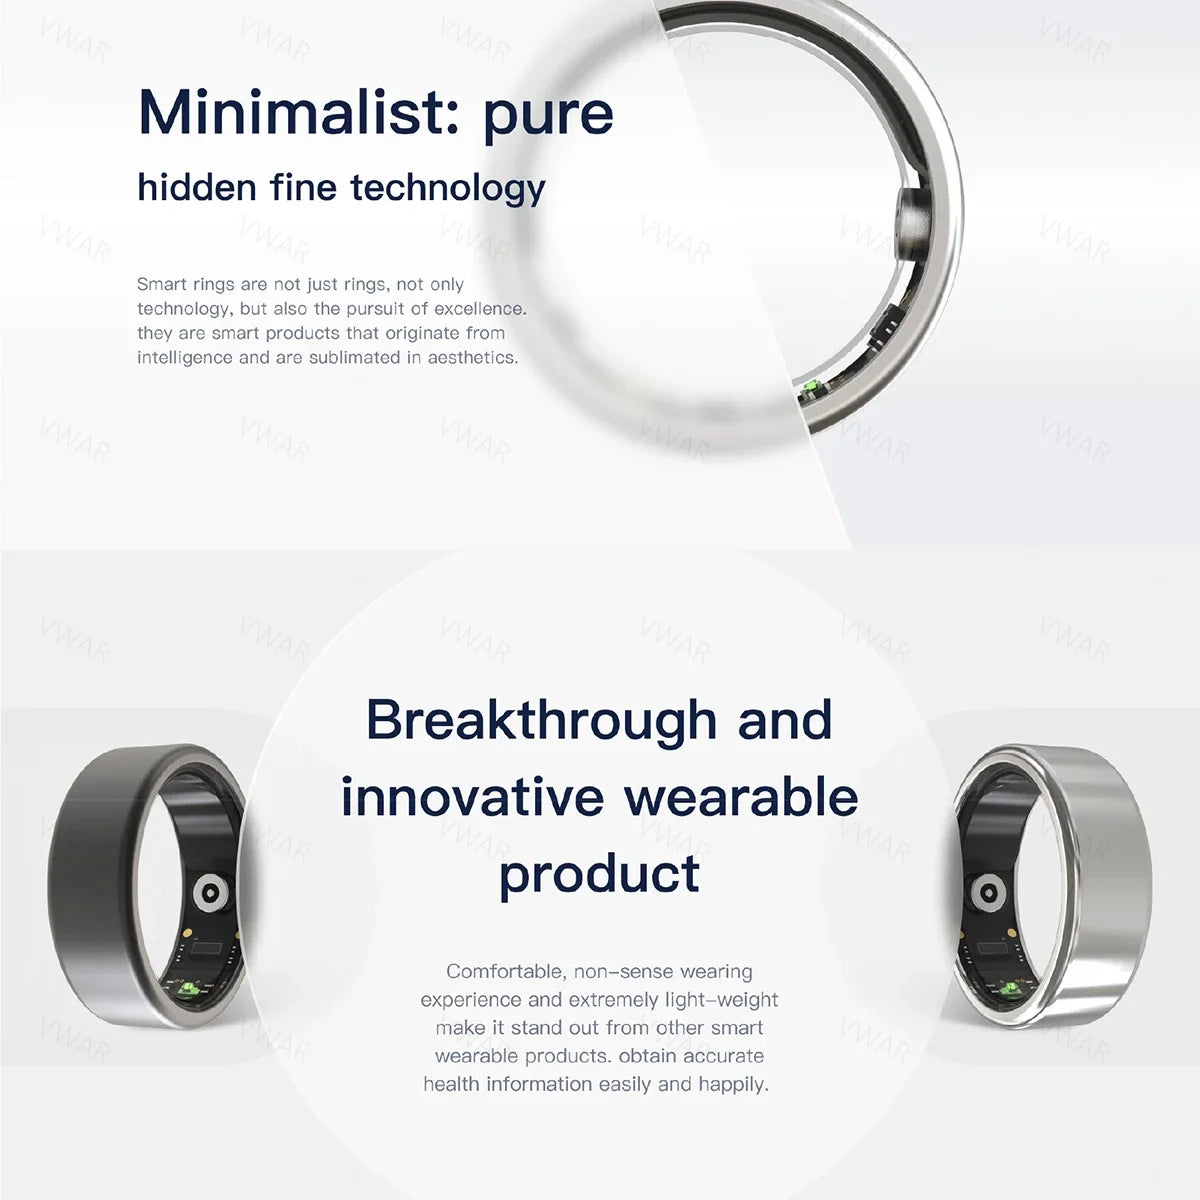 ProsperityWellness™ Smart Ring Fitness & Sleep Tracker